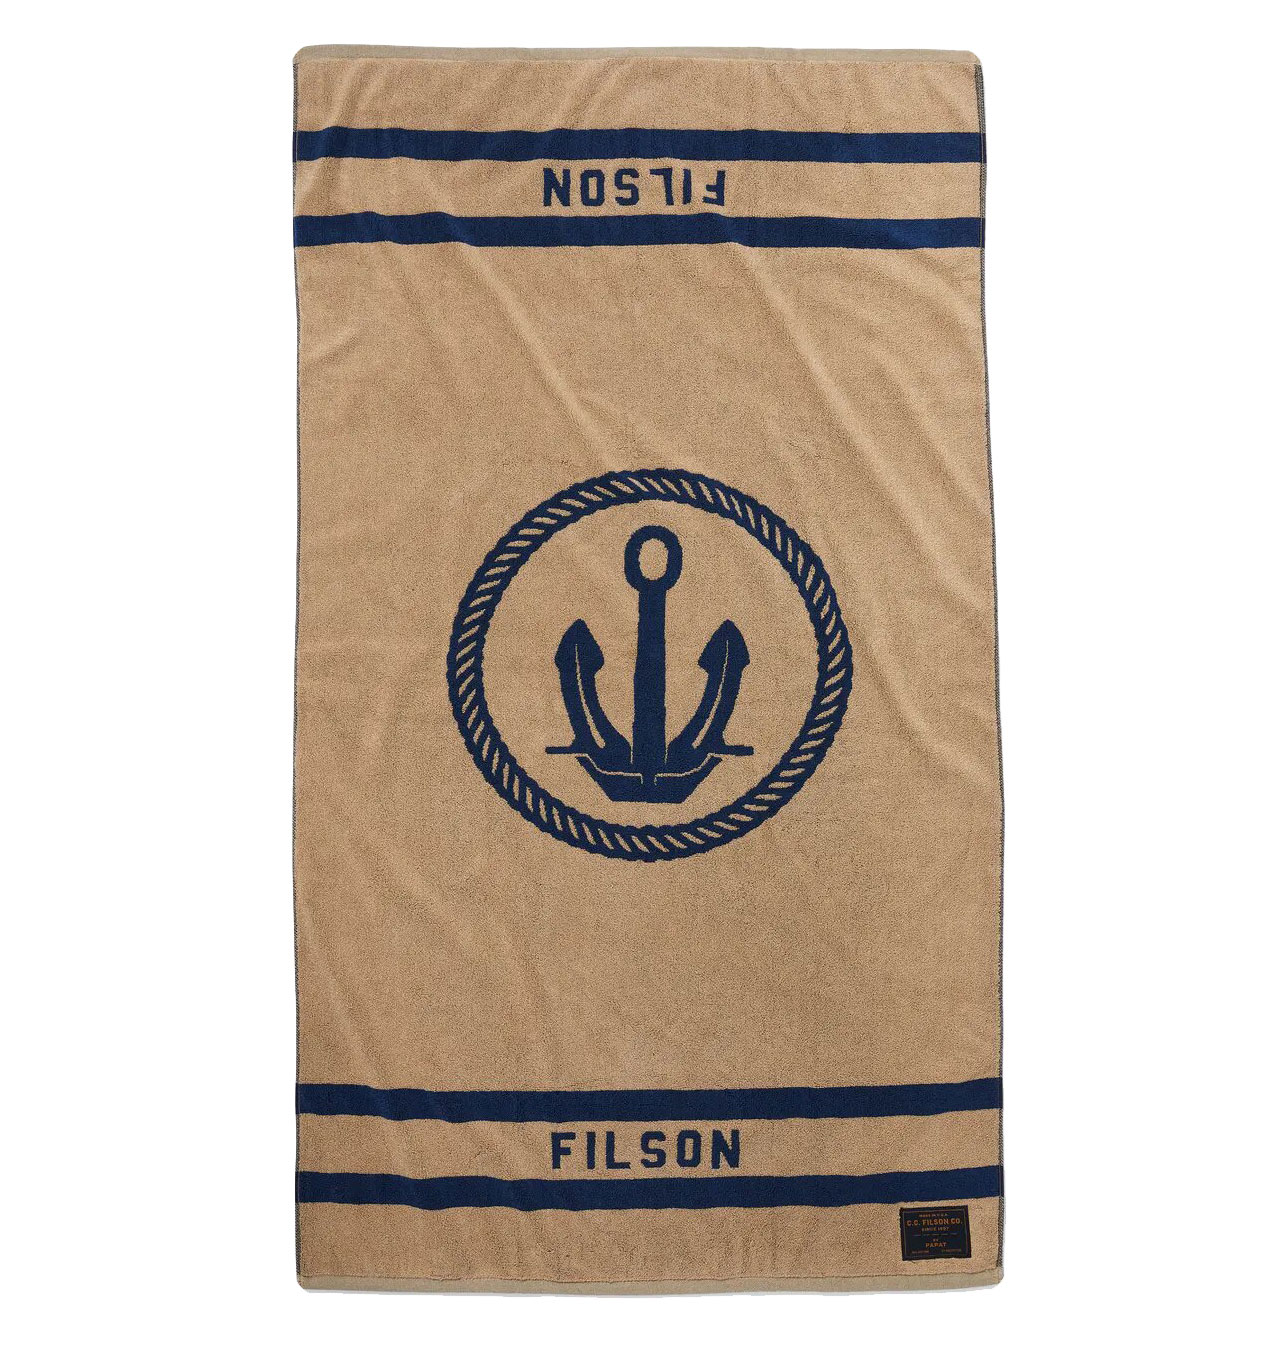 Filson - Filson Towel - Tan/Navy